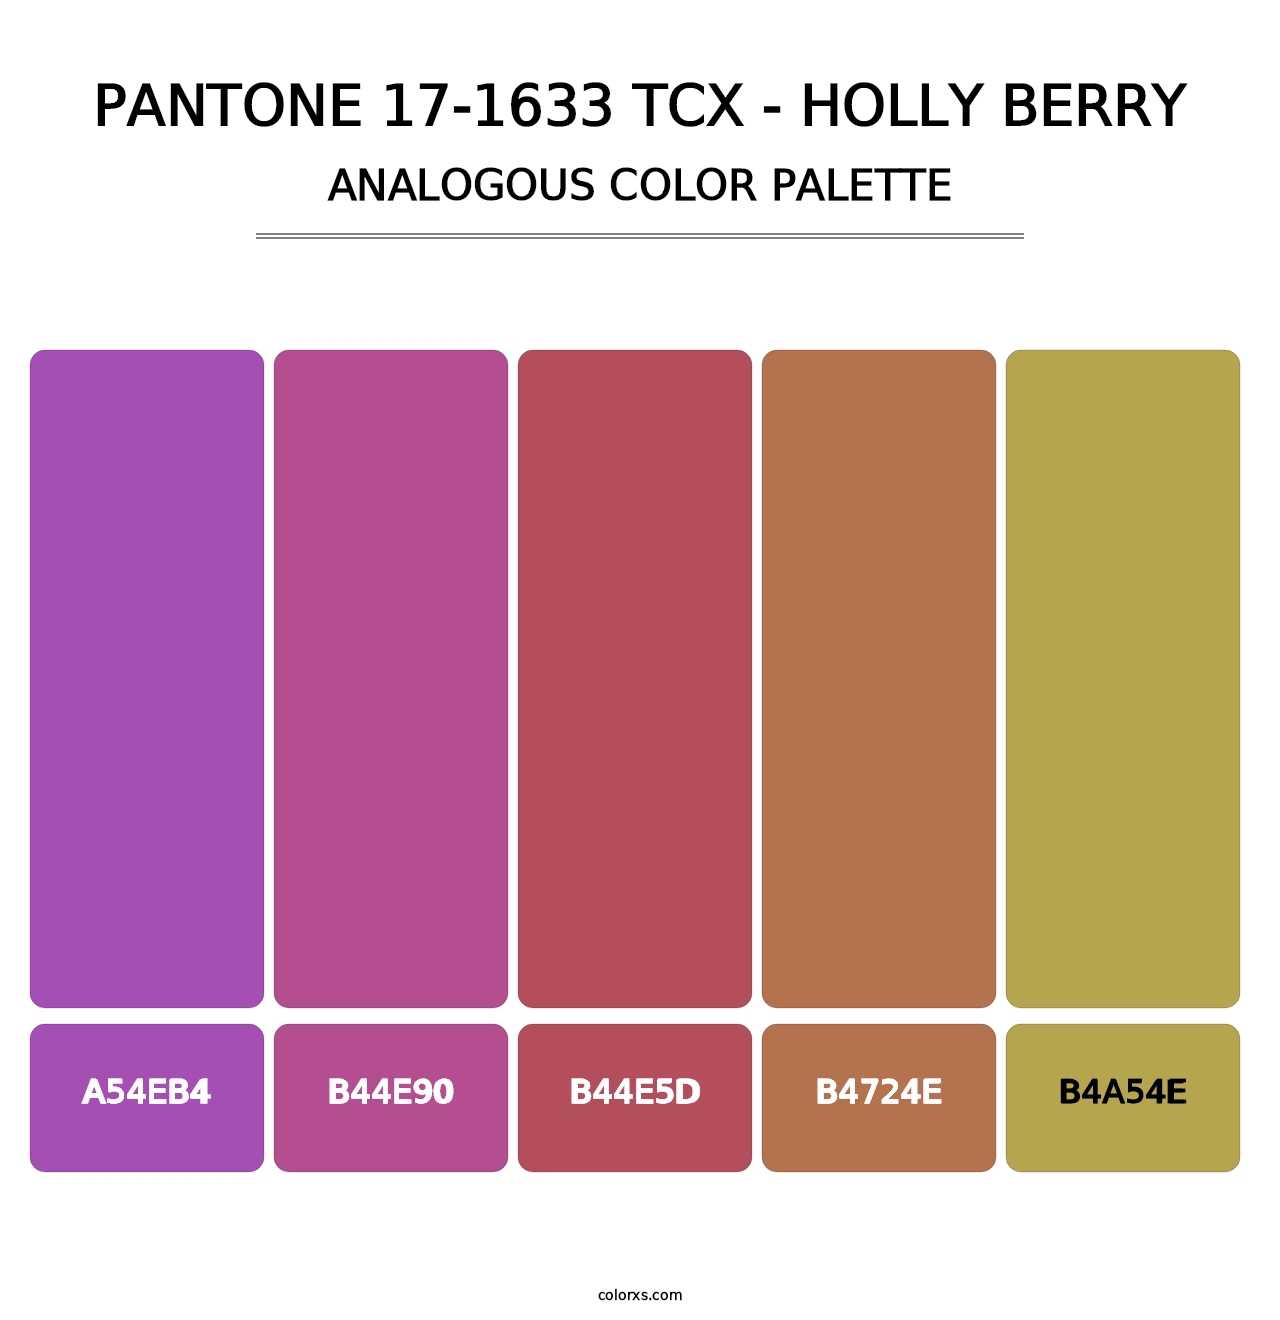 PANTONE 17-1633 TCX - Holly Berry - Analogous Color Palette